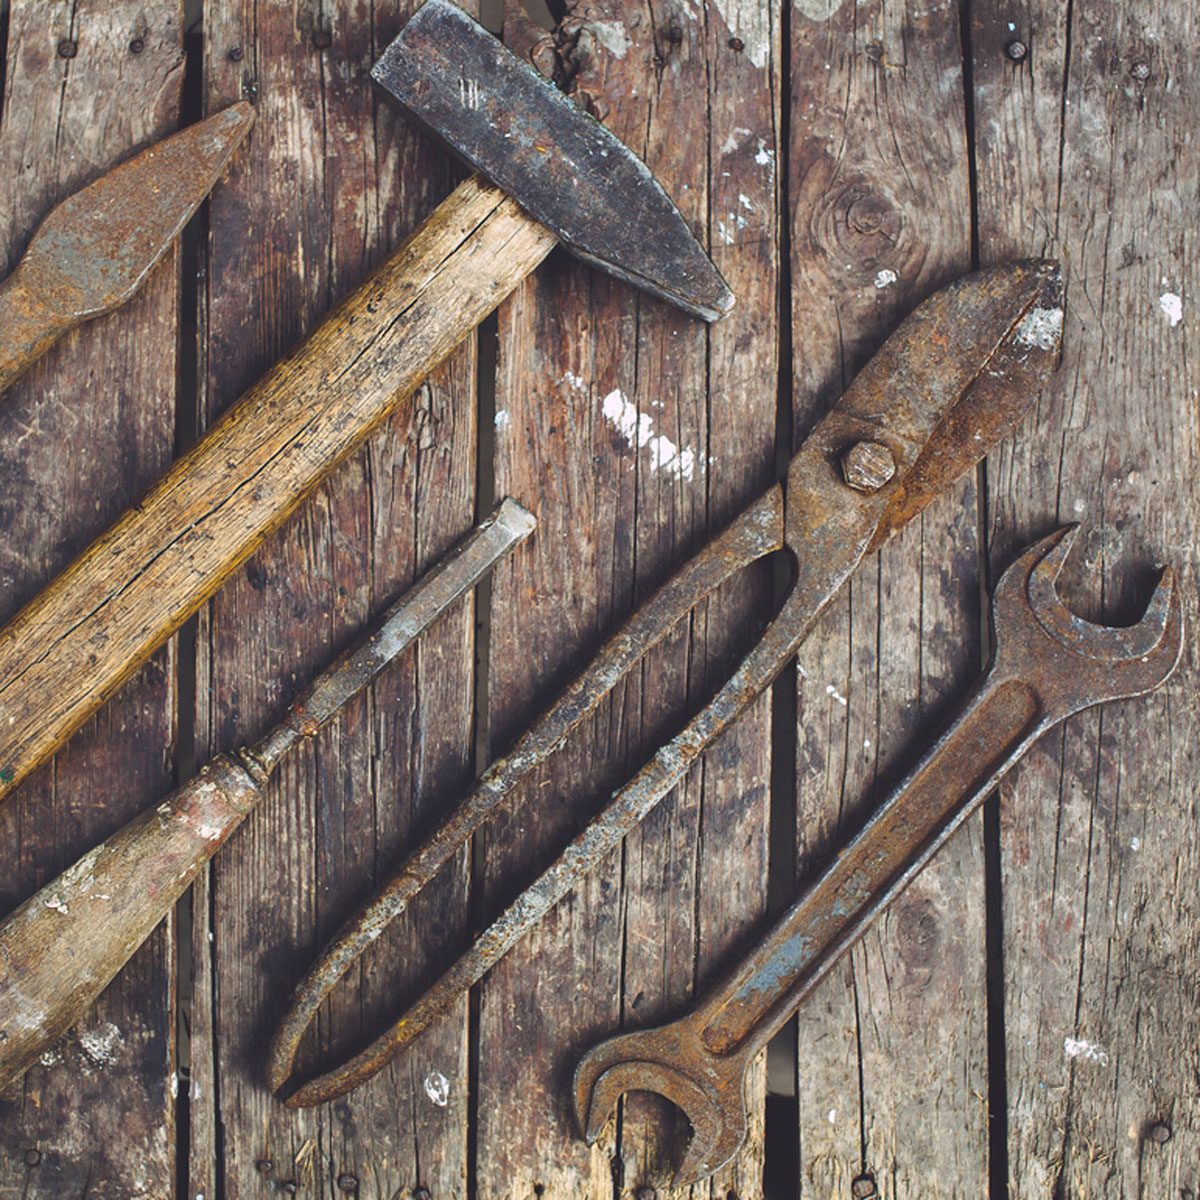 Rusty tools